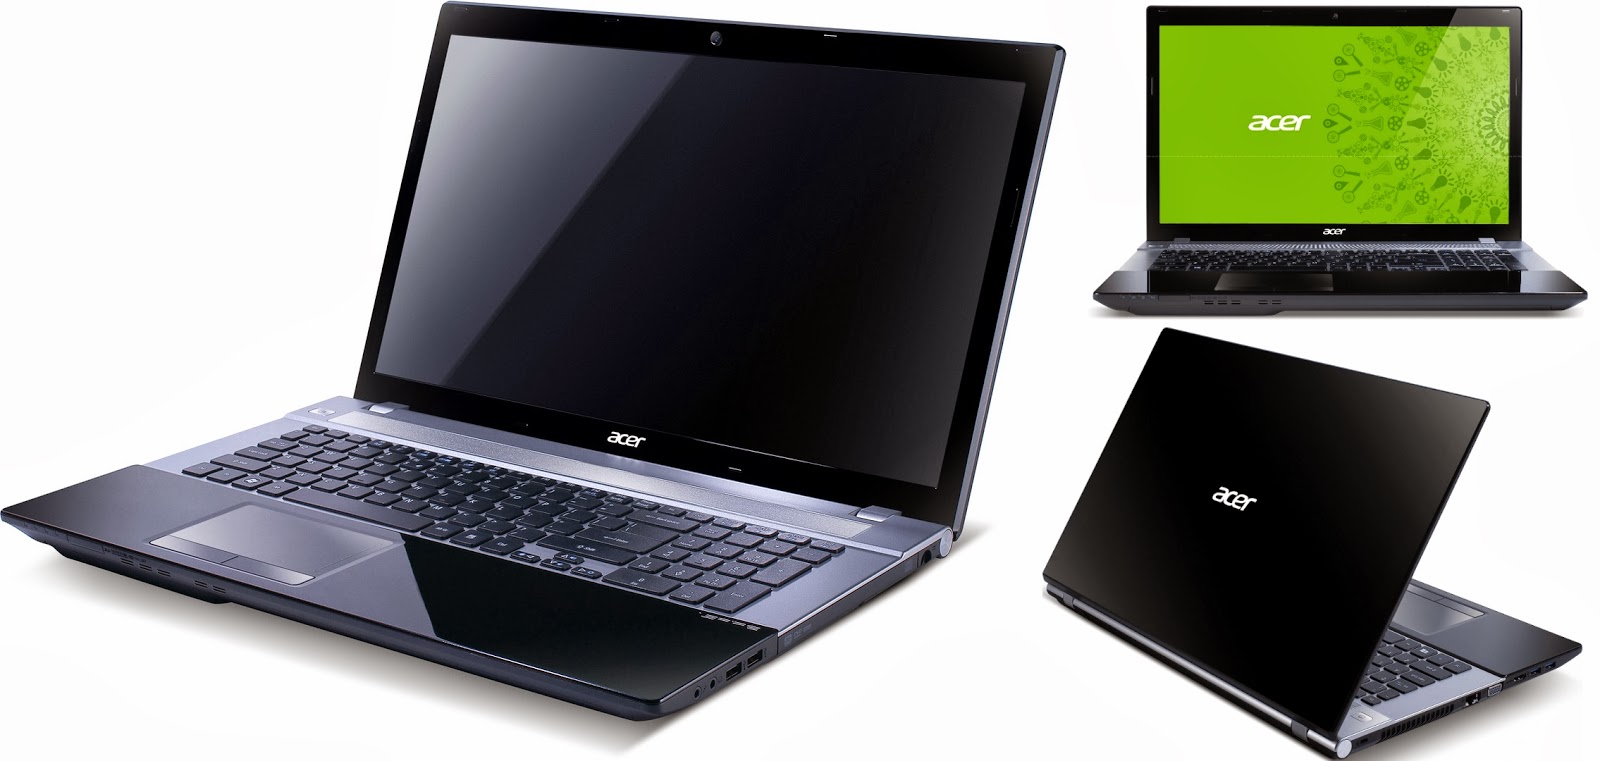 Portátil 17": Acer Aspire V3-772G-747a321.5TBDWakk [NX.M74EB.006]